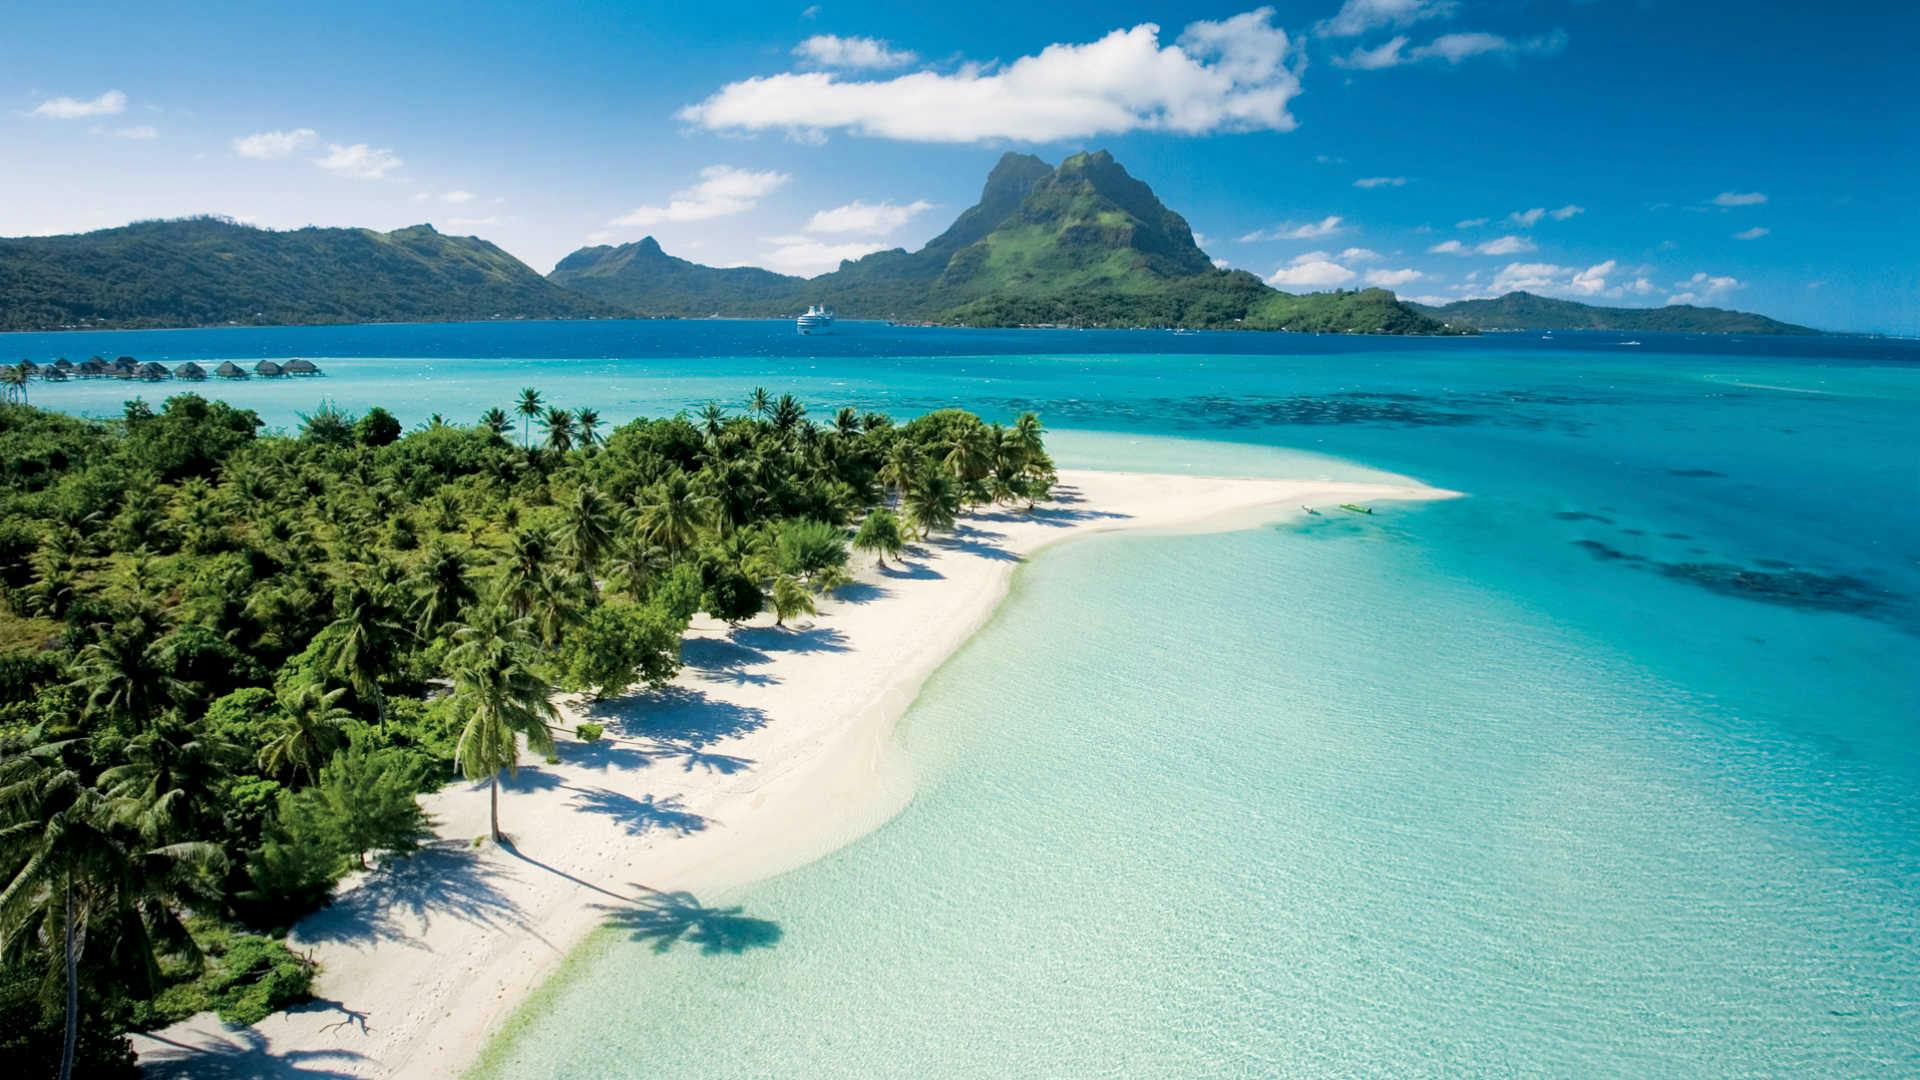 Voyage in Tahiti & French Polynesia